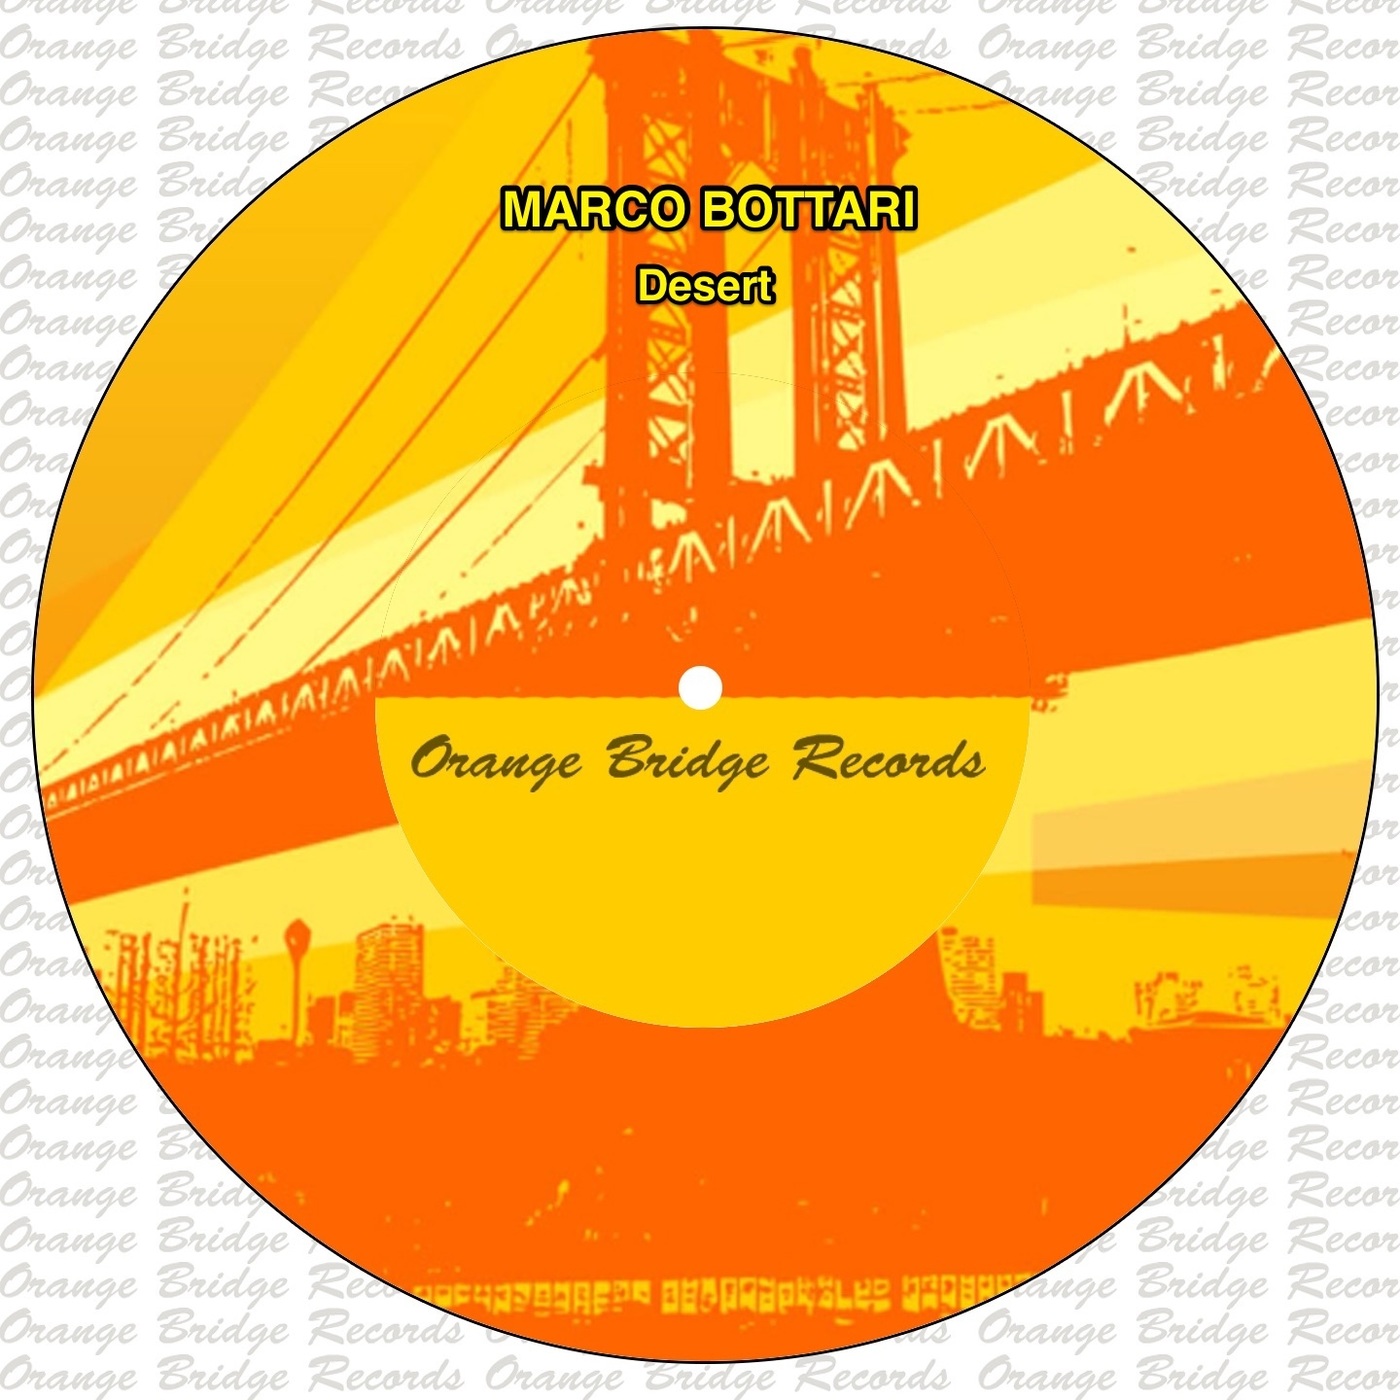 Marco Bottari - Desert / Orange Bridge Records